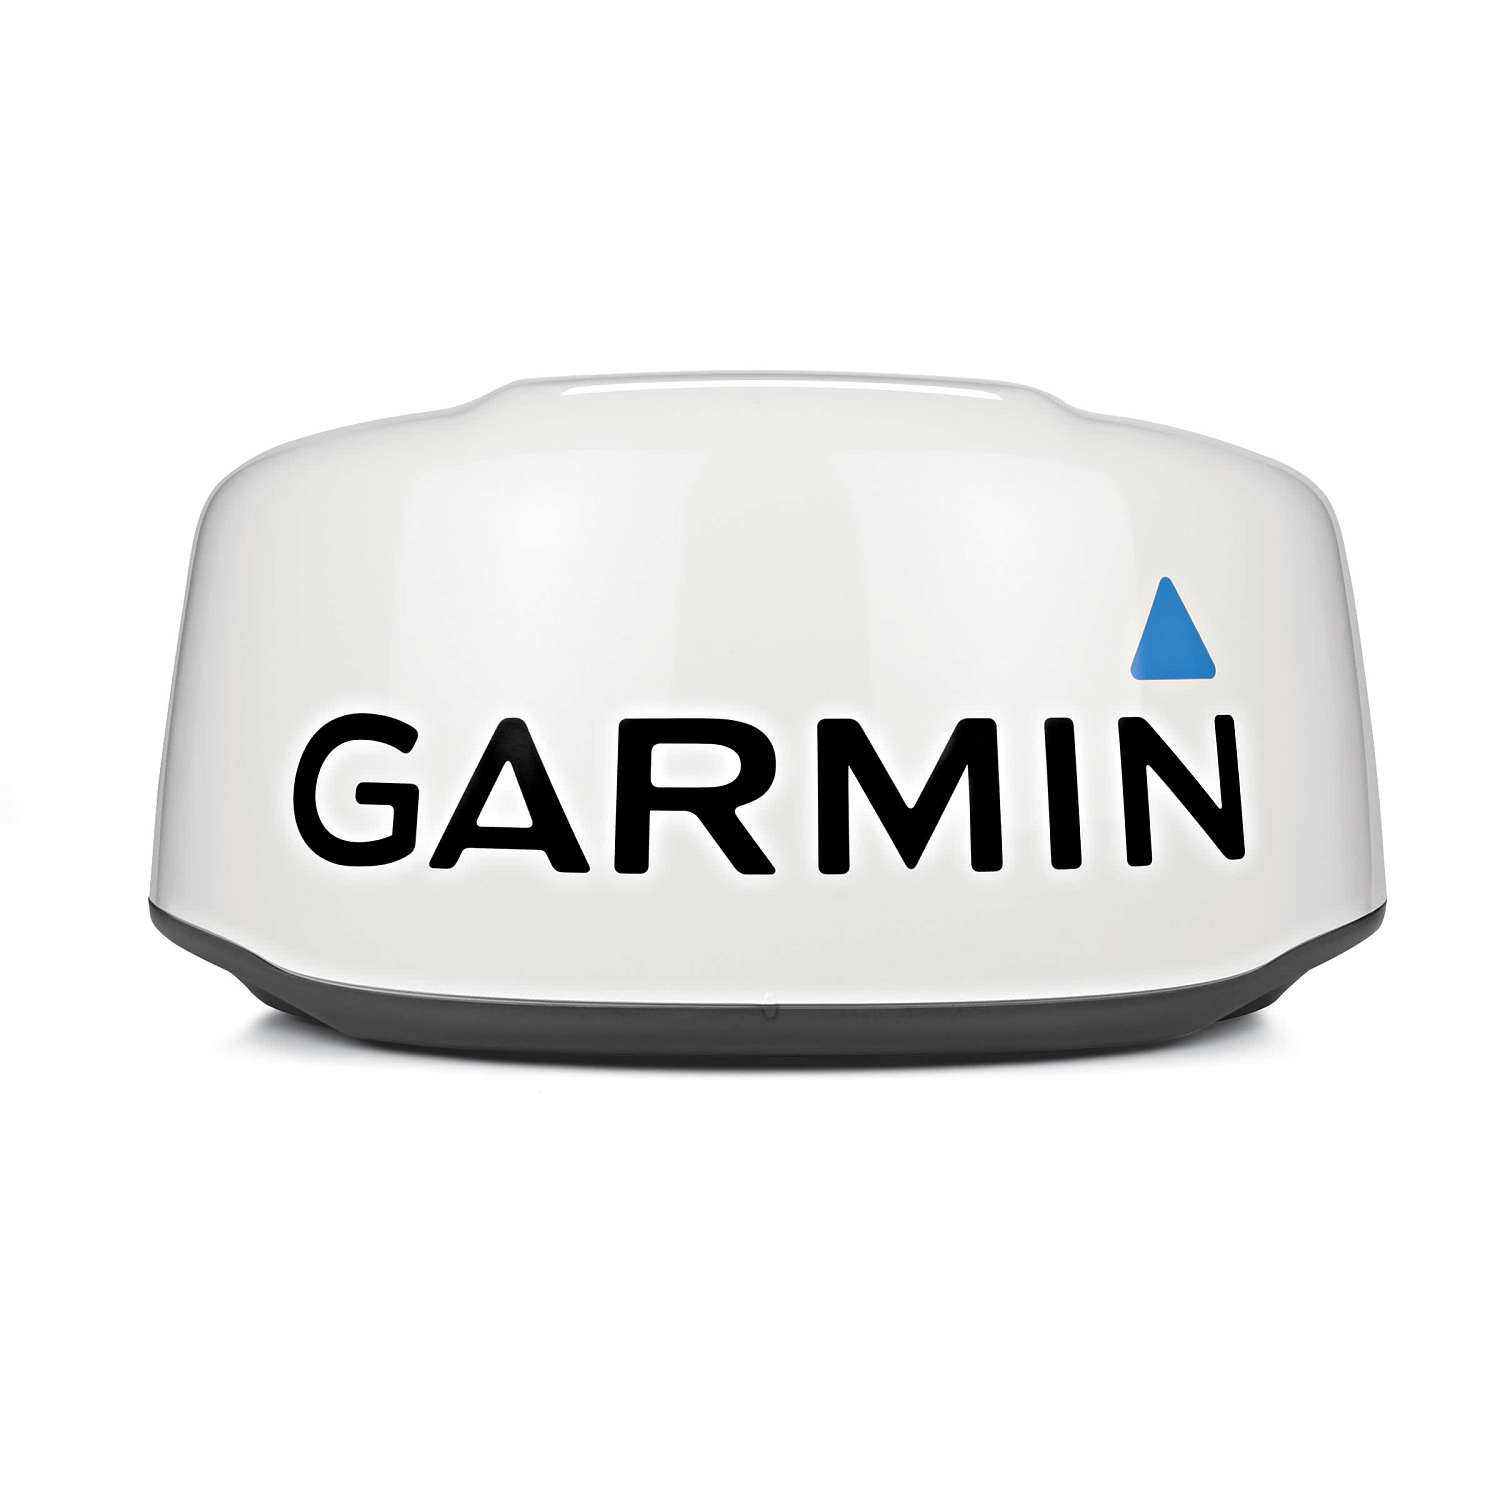 GARMIN GMR 18 xHD Radar Antenna